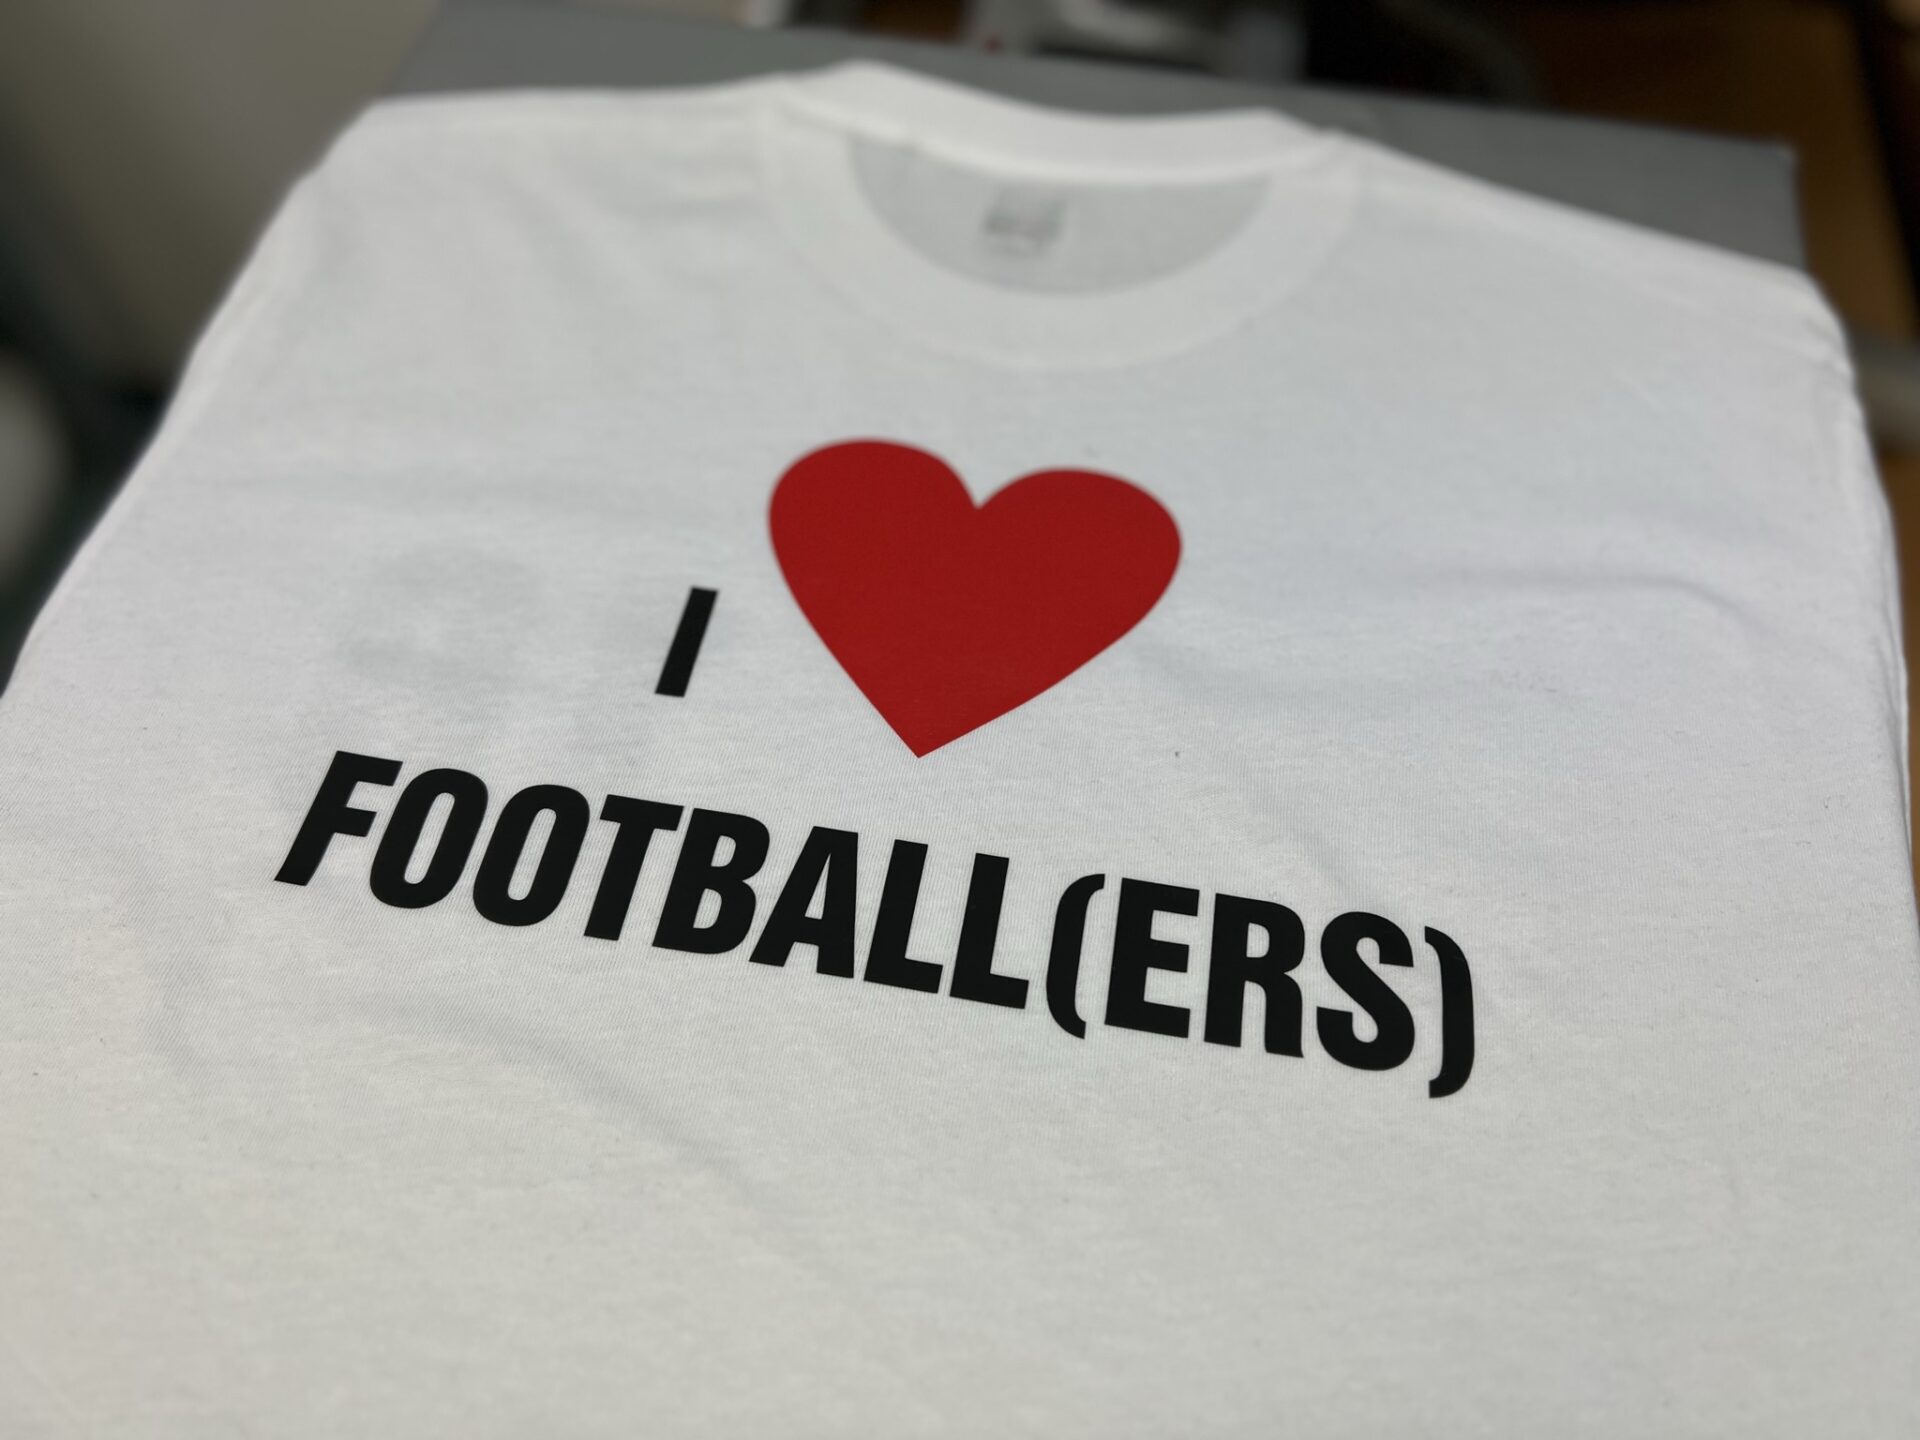 Majica s potiskom I love football(ers)